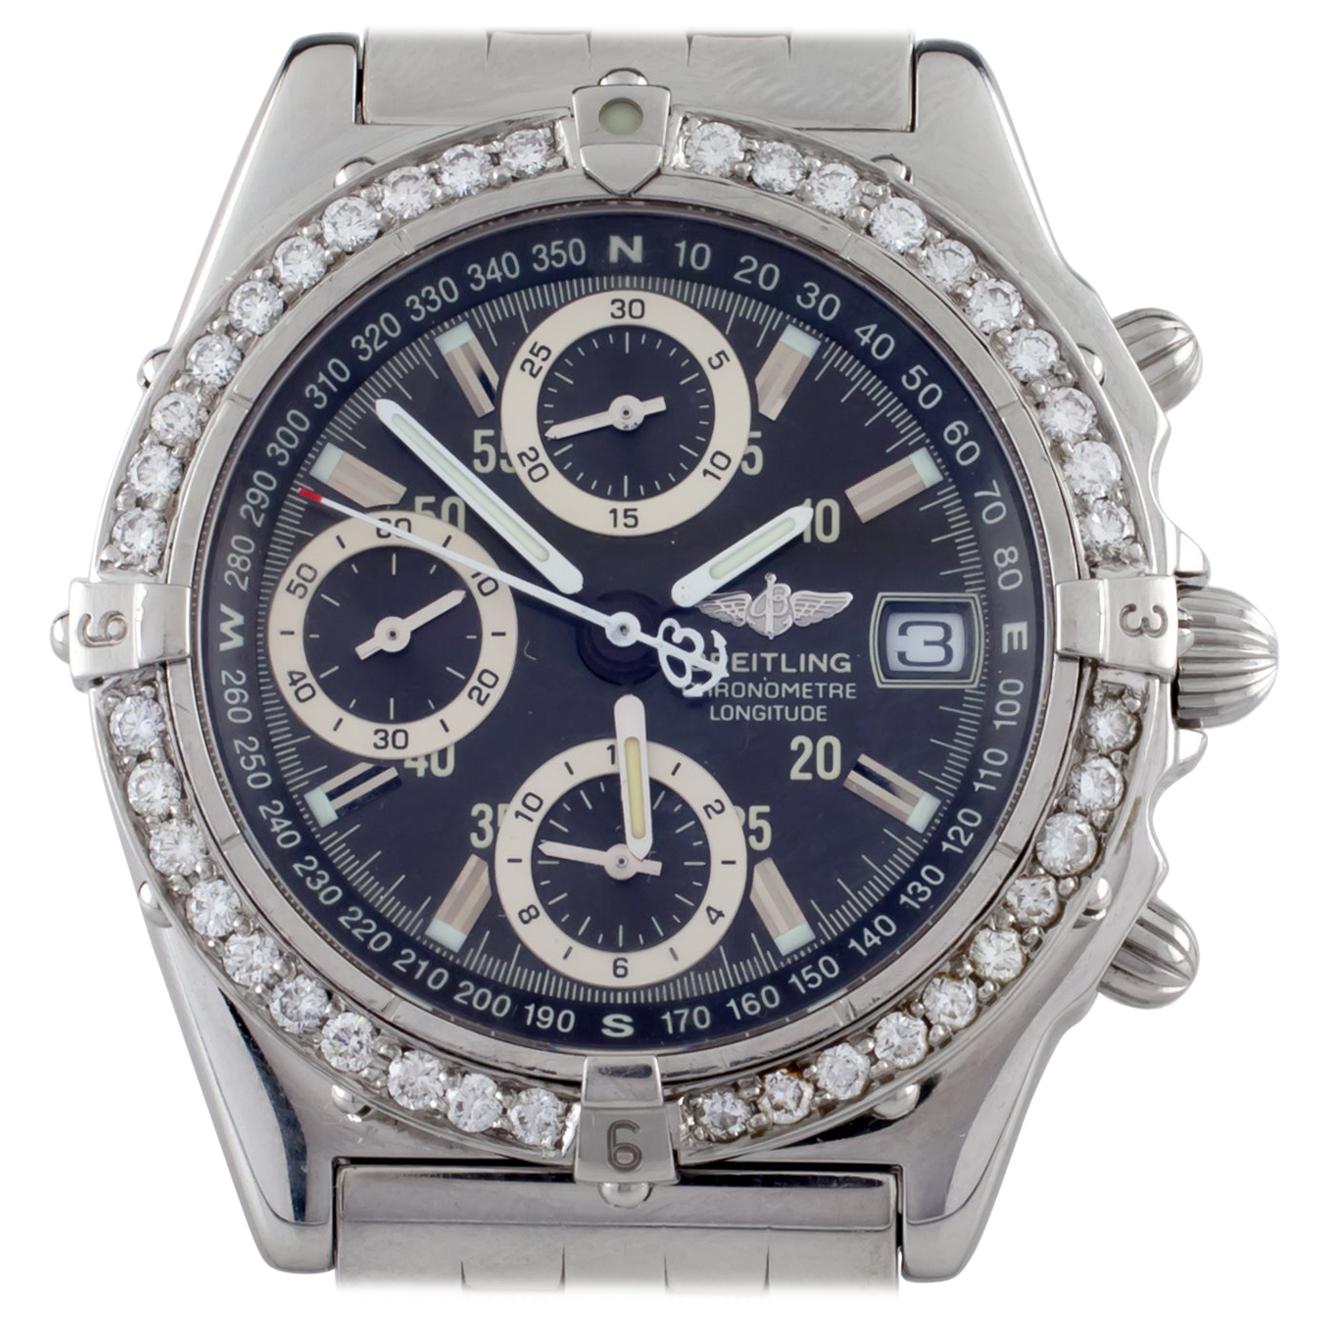 Breitling Chronometre Longitude SS Automatik Herrenuhr A20348 mit Diamant-Lünette